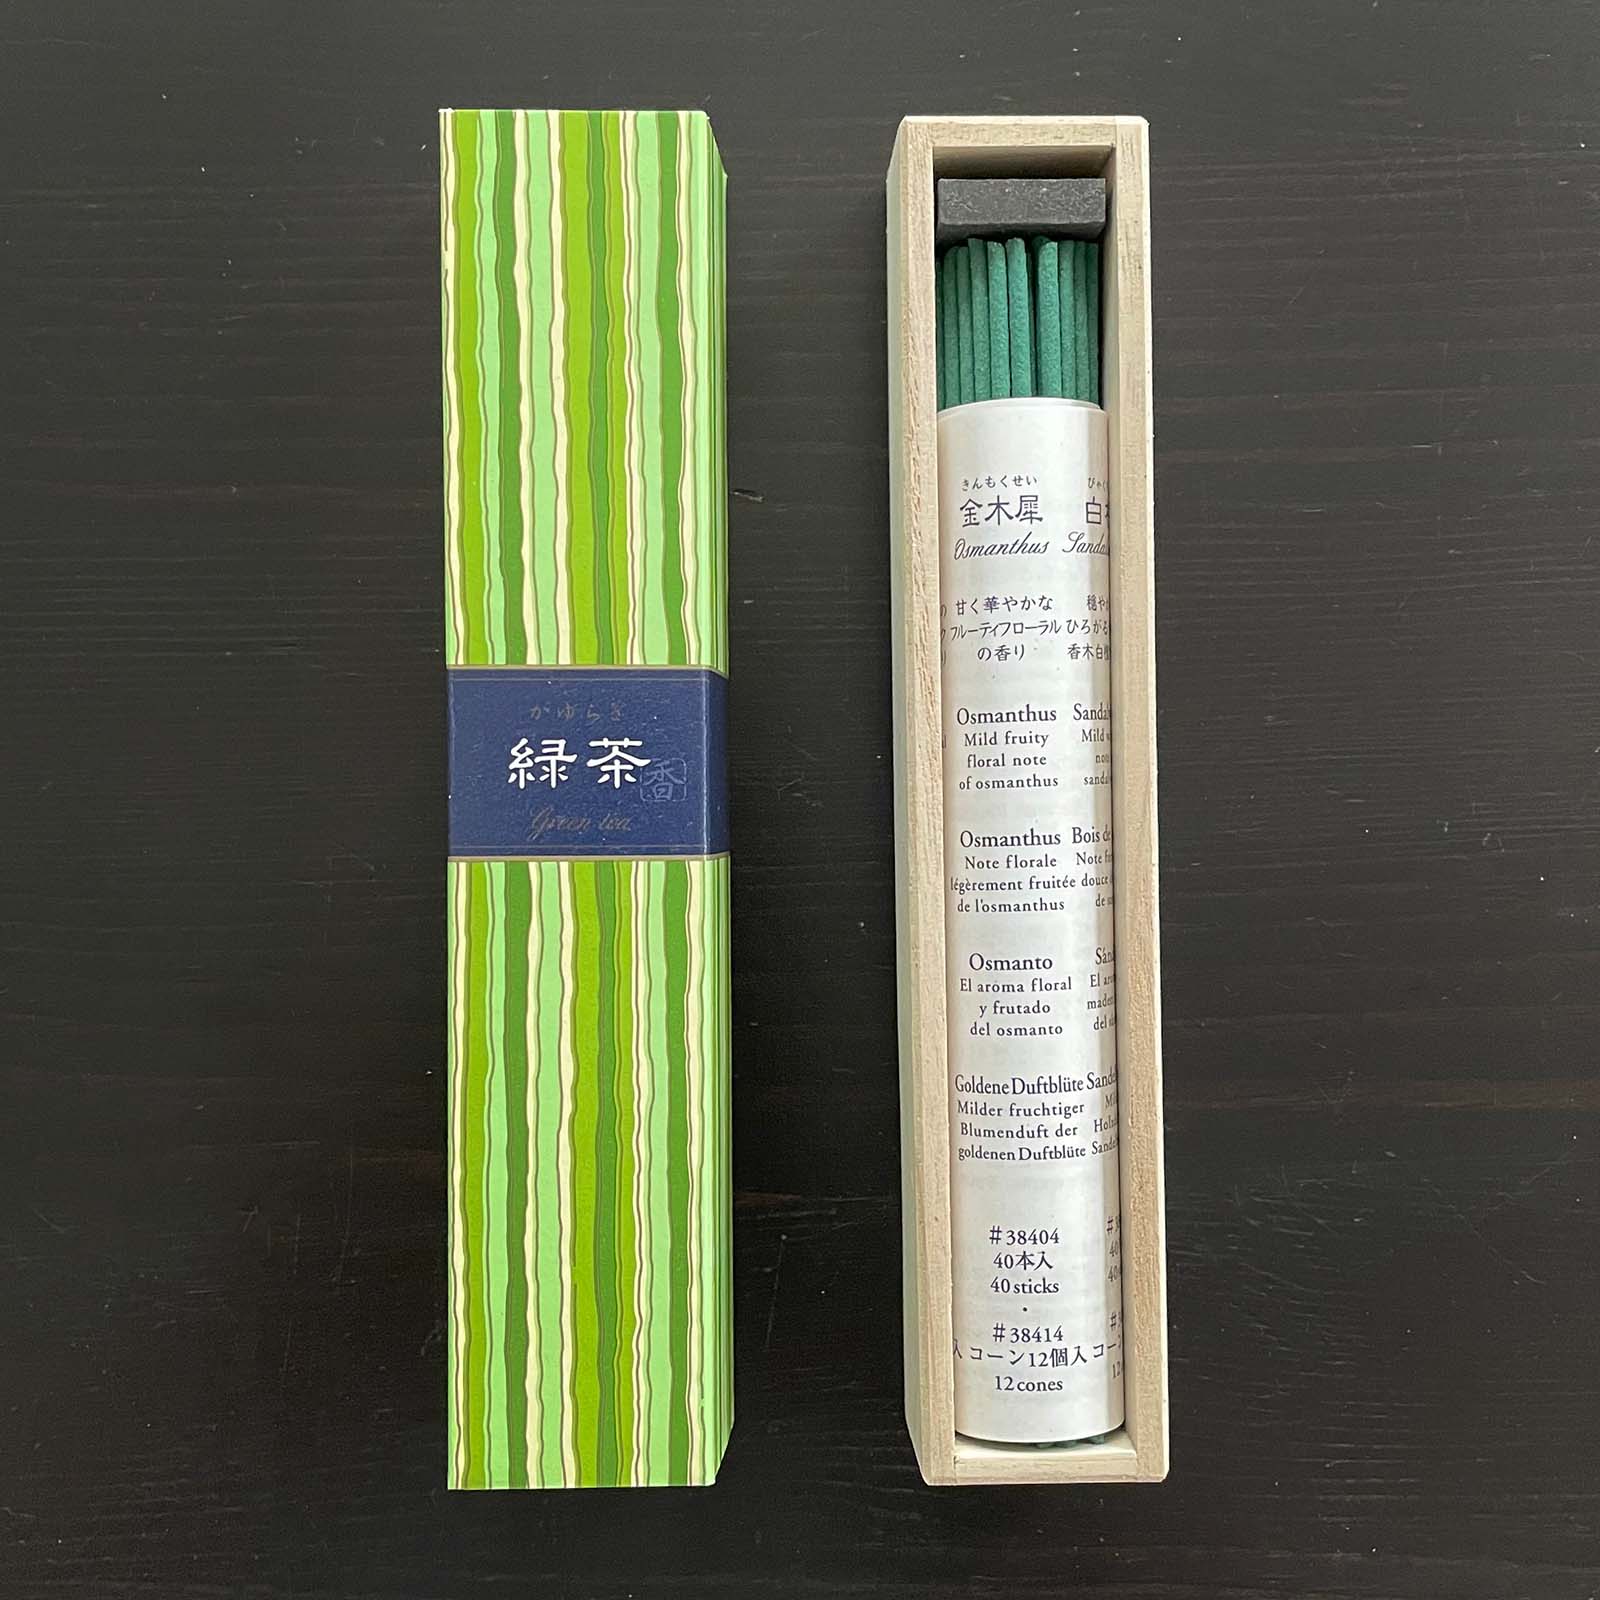 Kayuragi Incense Sticks_Lifestyle_Incense_Japanese Style_Traditional_1_2_3_4_5_6_7_8_9_10